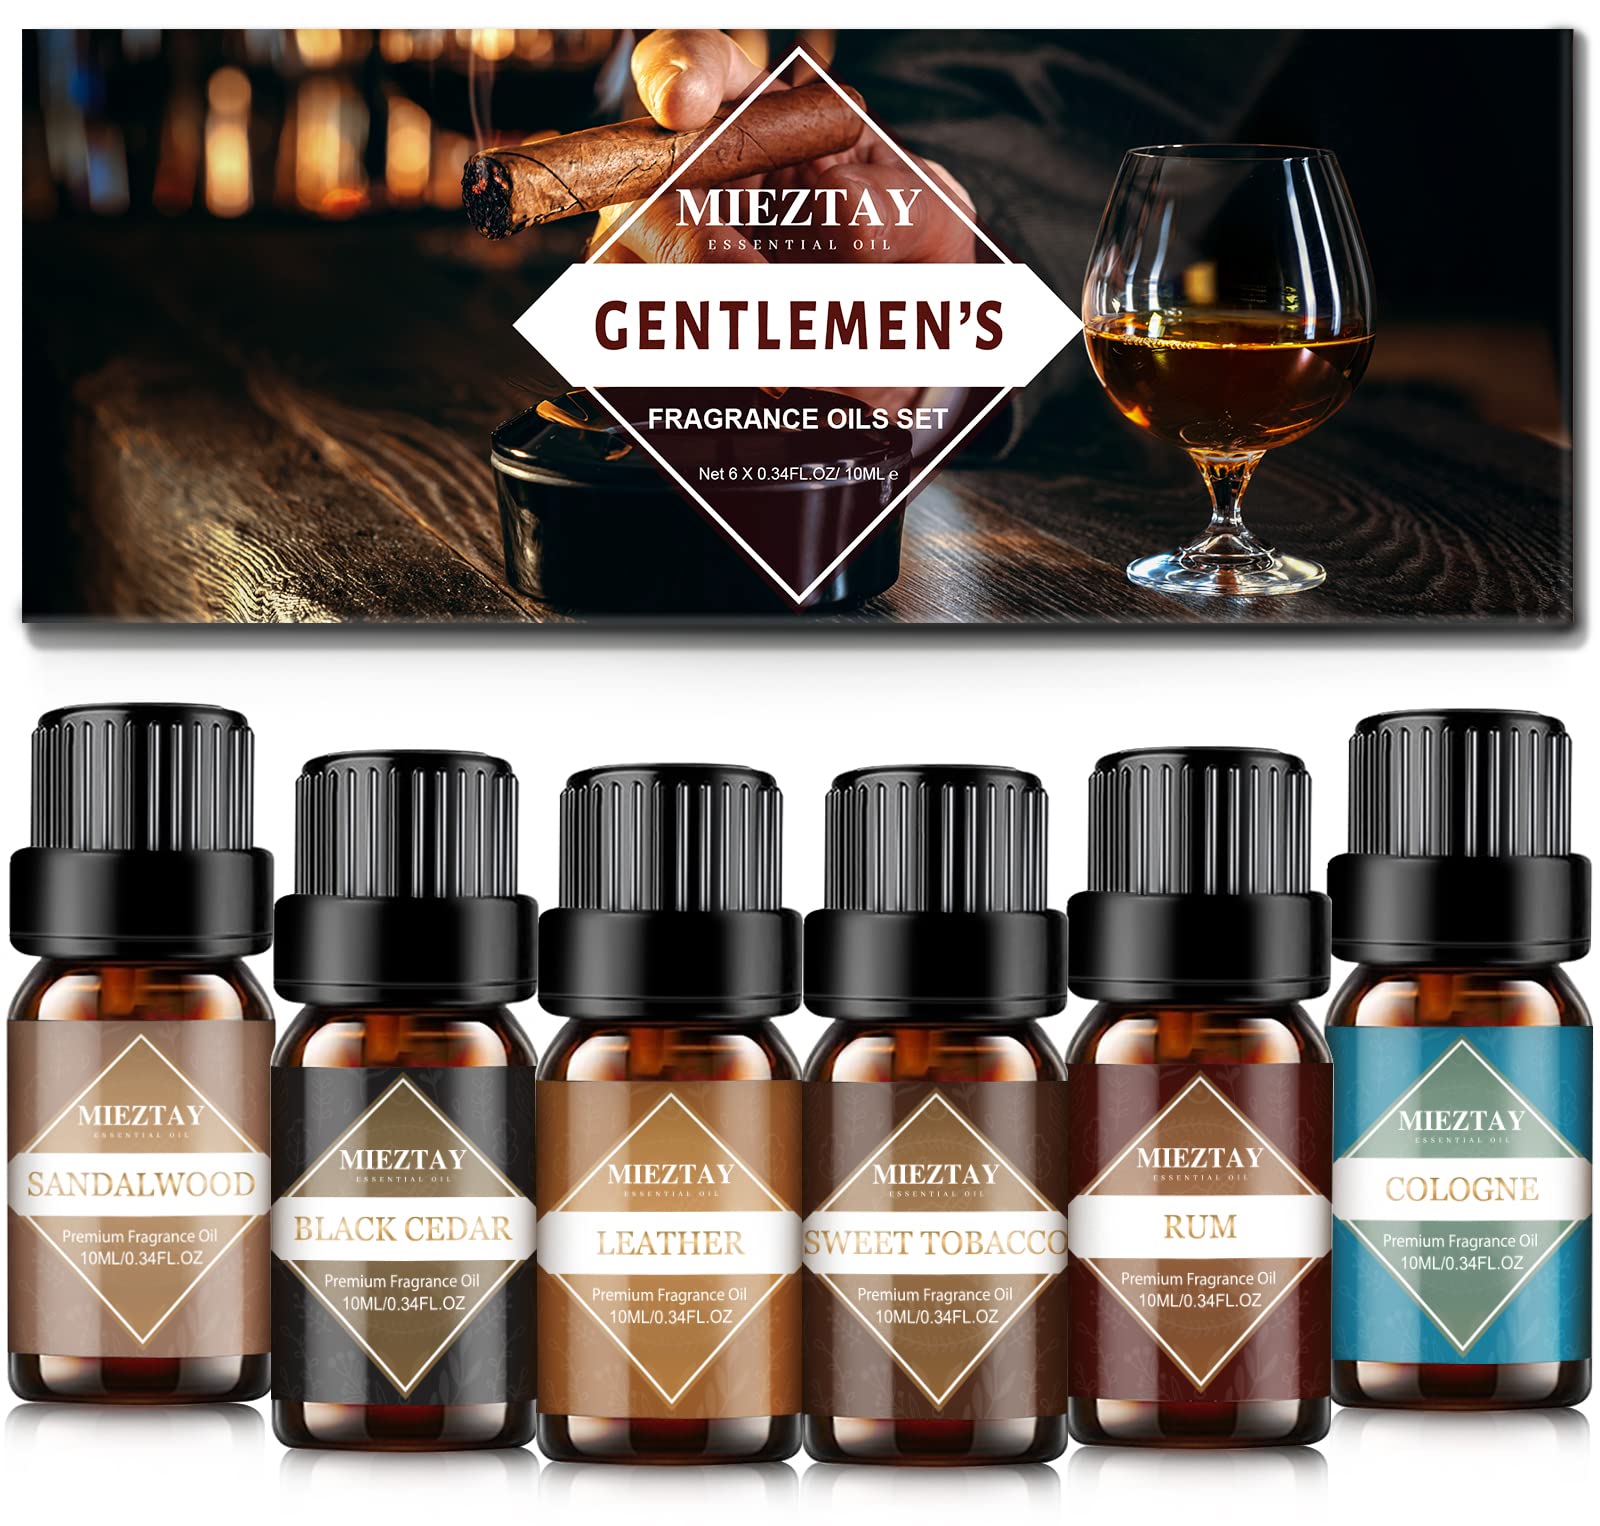 Gentlemen's Essentials Fragrance Oils 8 X 10 mL (0.33 Oz) - 100% Pure -  Leather, Bay Rum, Cedarwood, Sandalwood, Tobacco Rose, Bamboo, Birchwood  Pine, Masculine Musk Gift Set of 8 by Sponix 8 Pack 